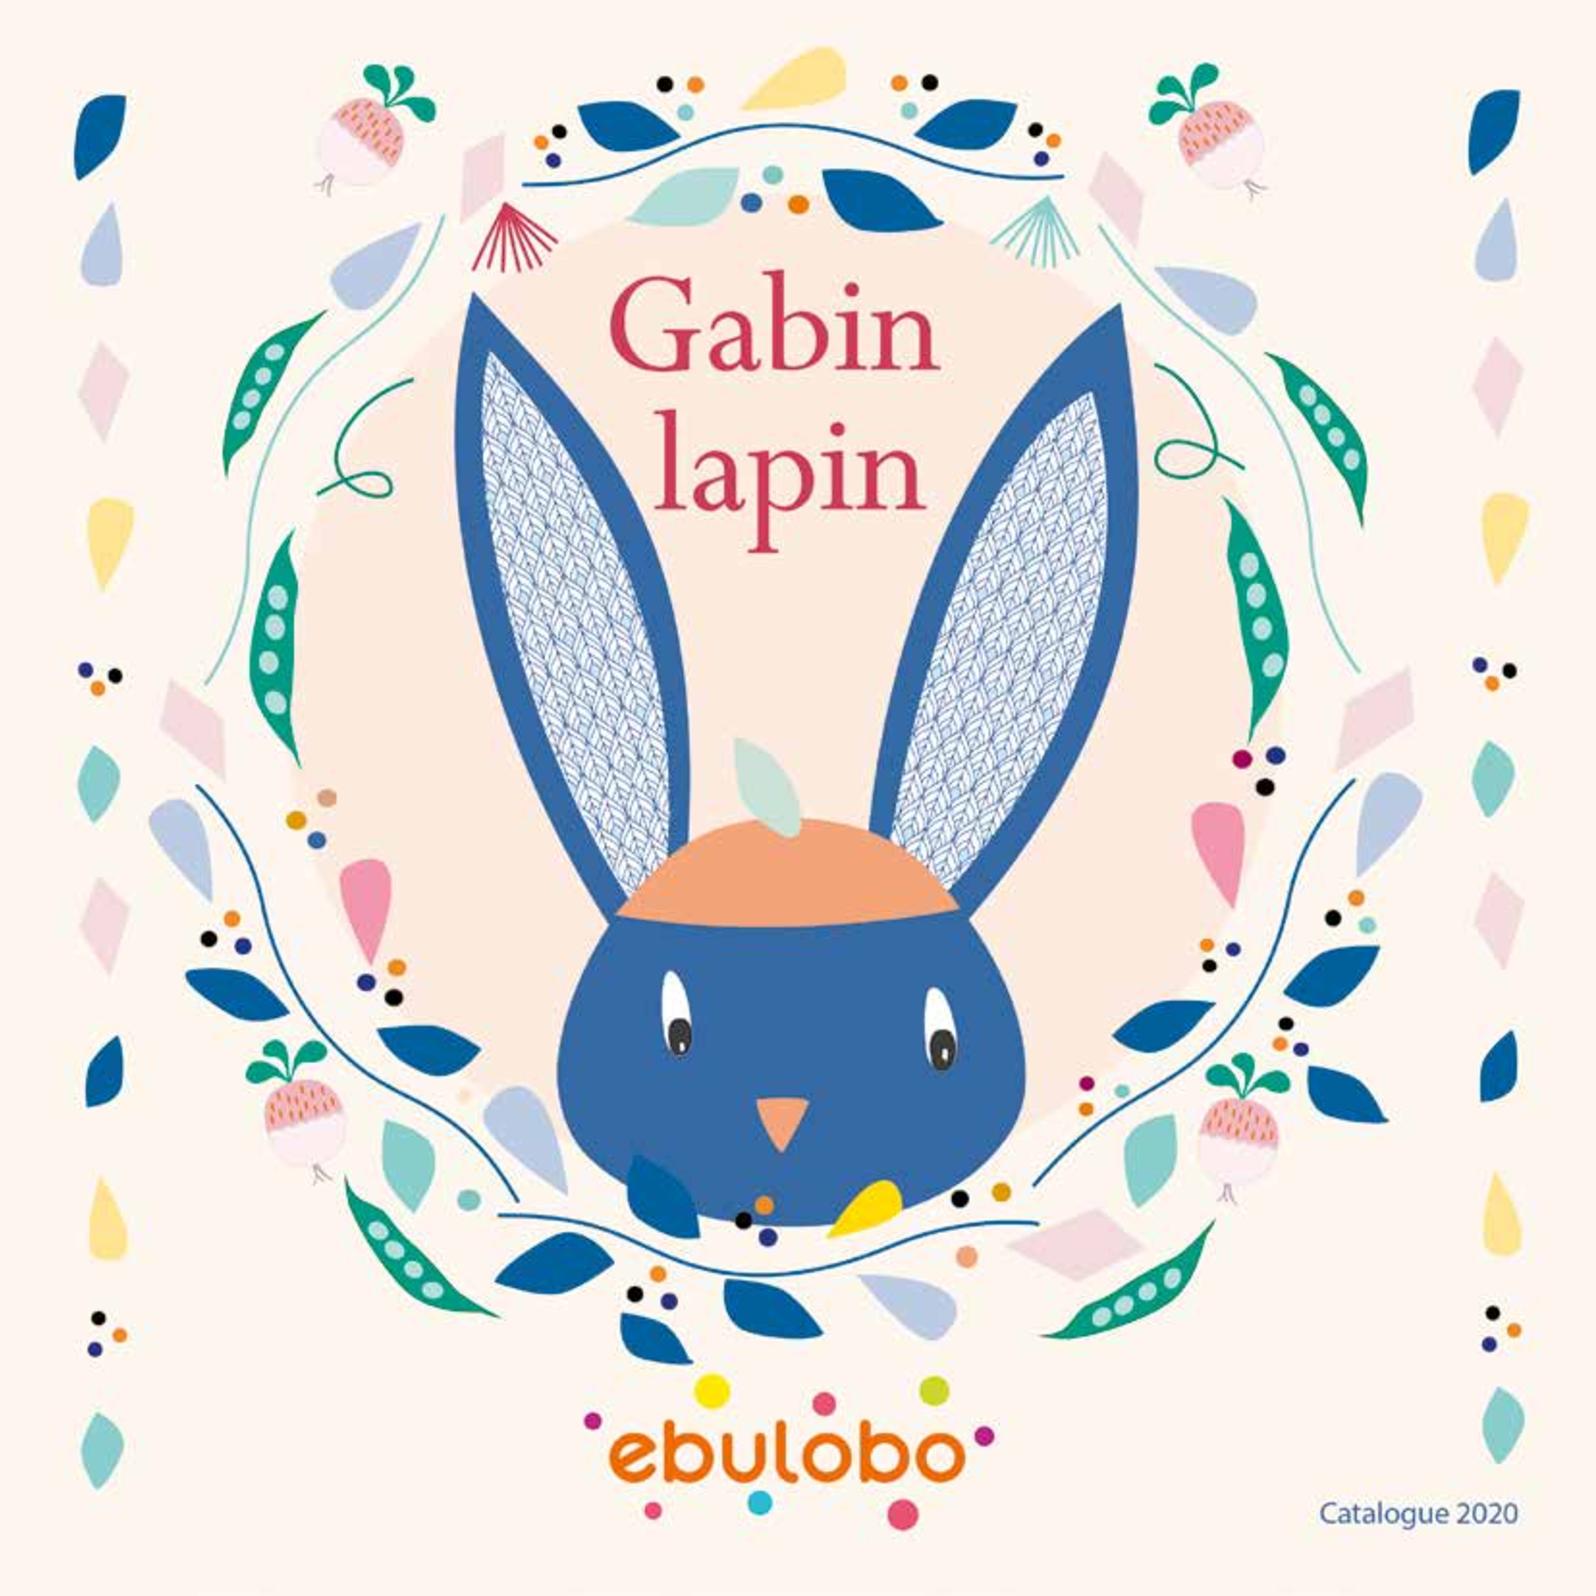 Gabin Lapin di Ebulobo: la nuova linea per bambini